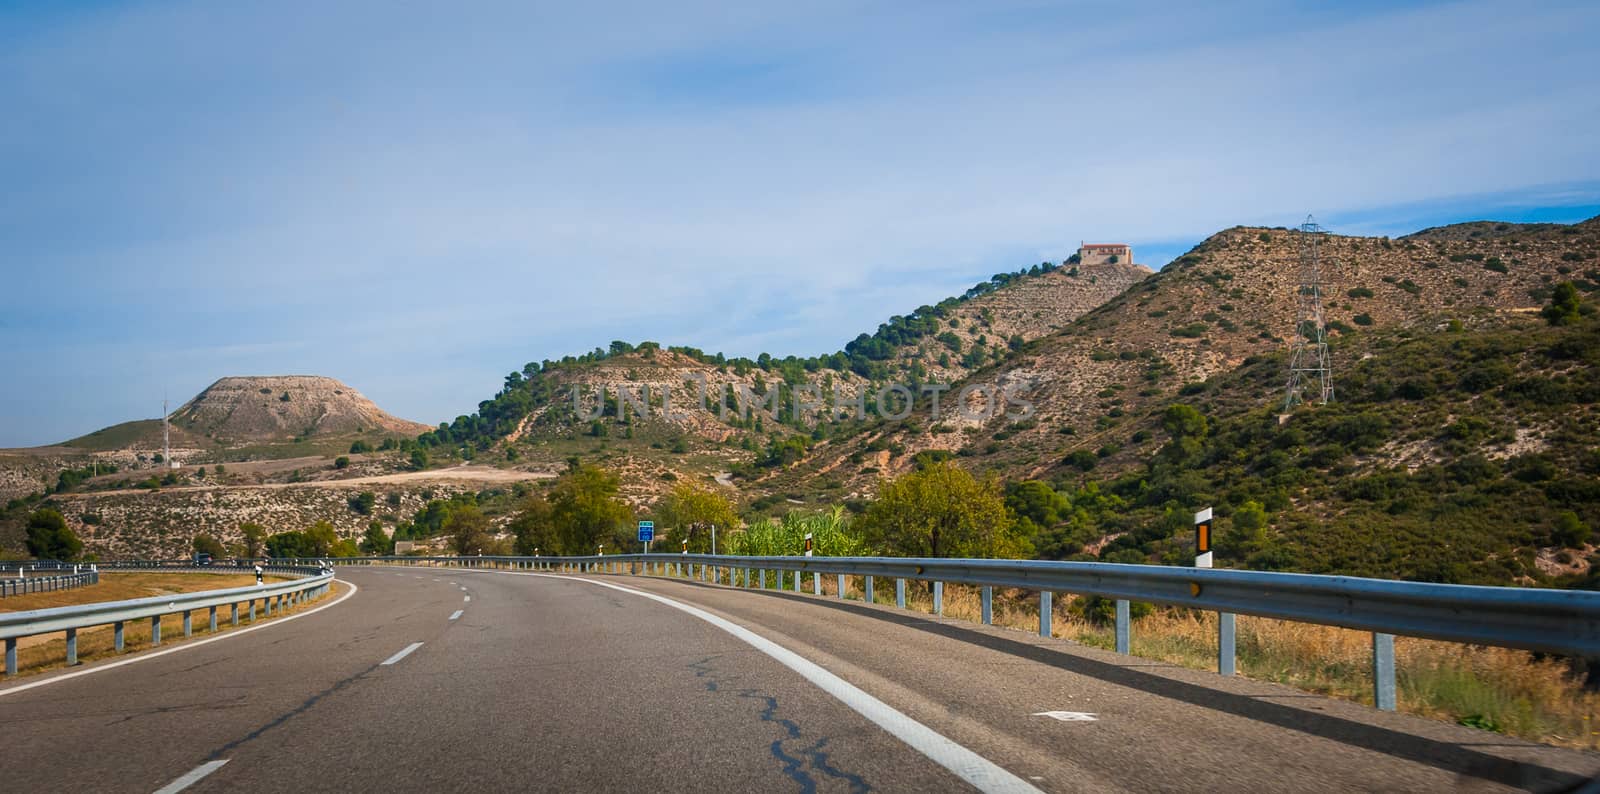 Spanish countryside as it seen driving along toward Barcelona.